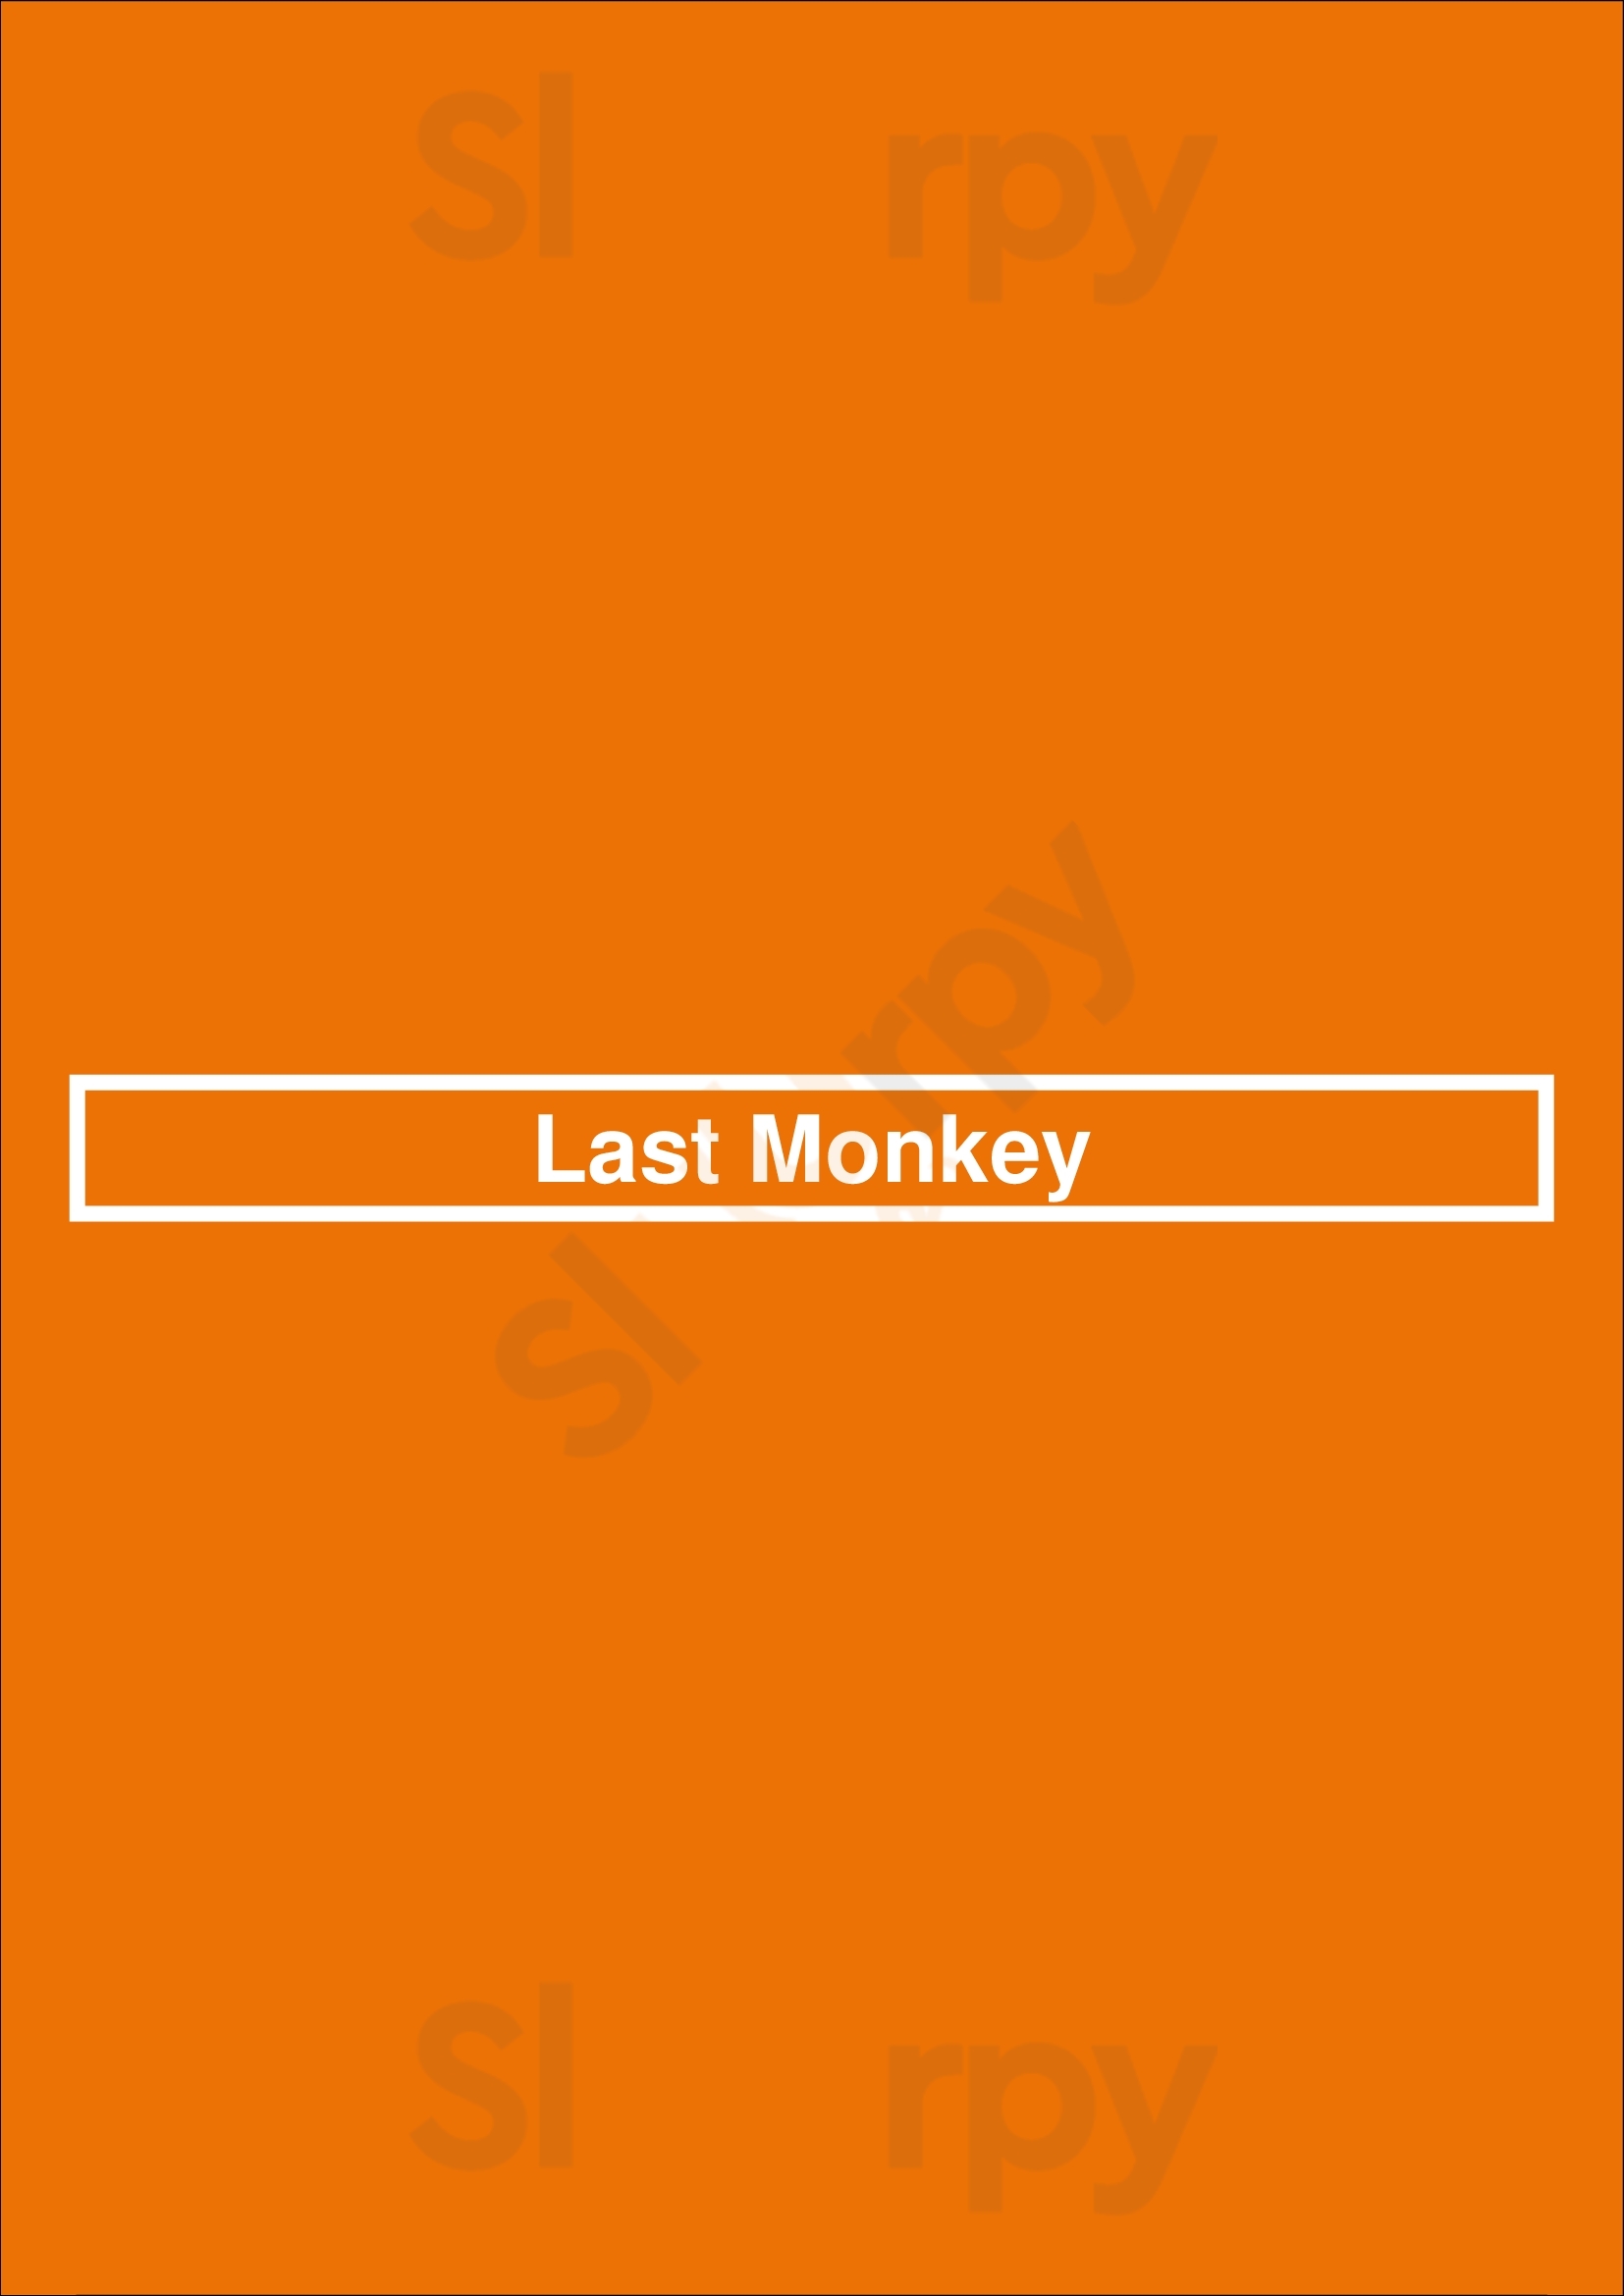 Last Monkey Barcelona Menu - 1